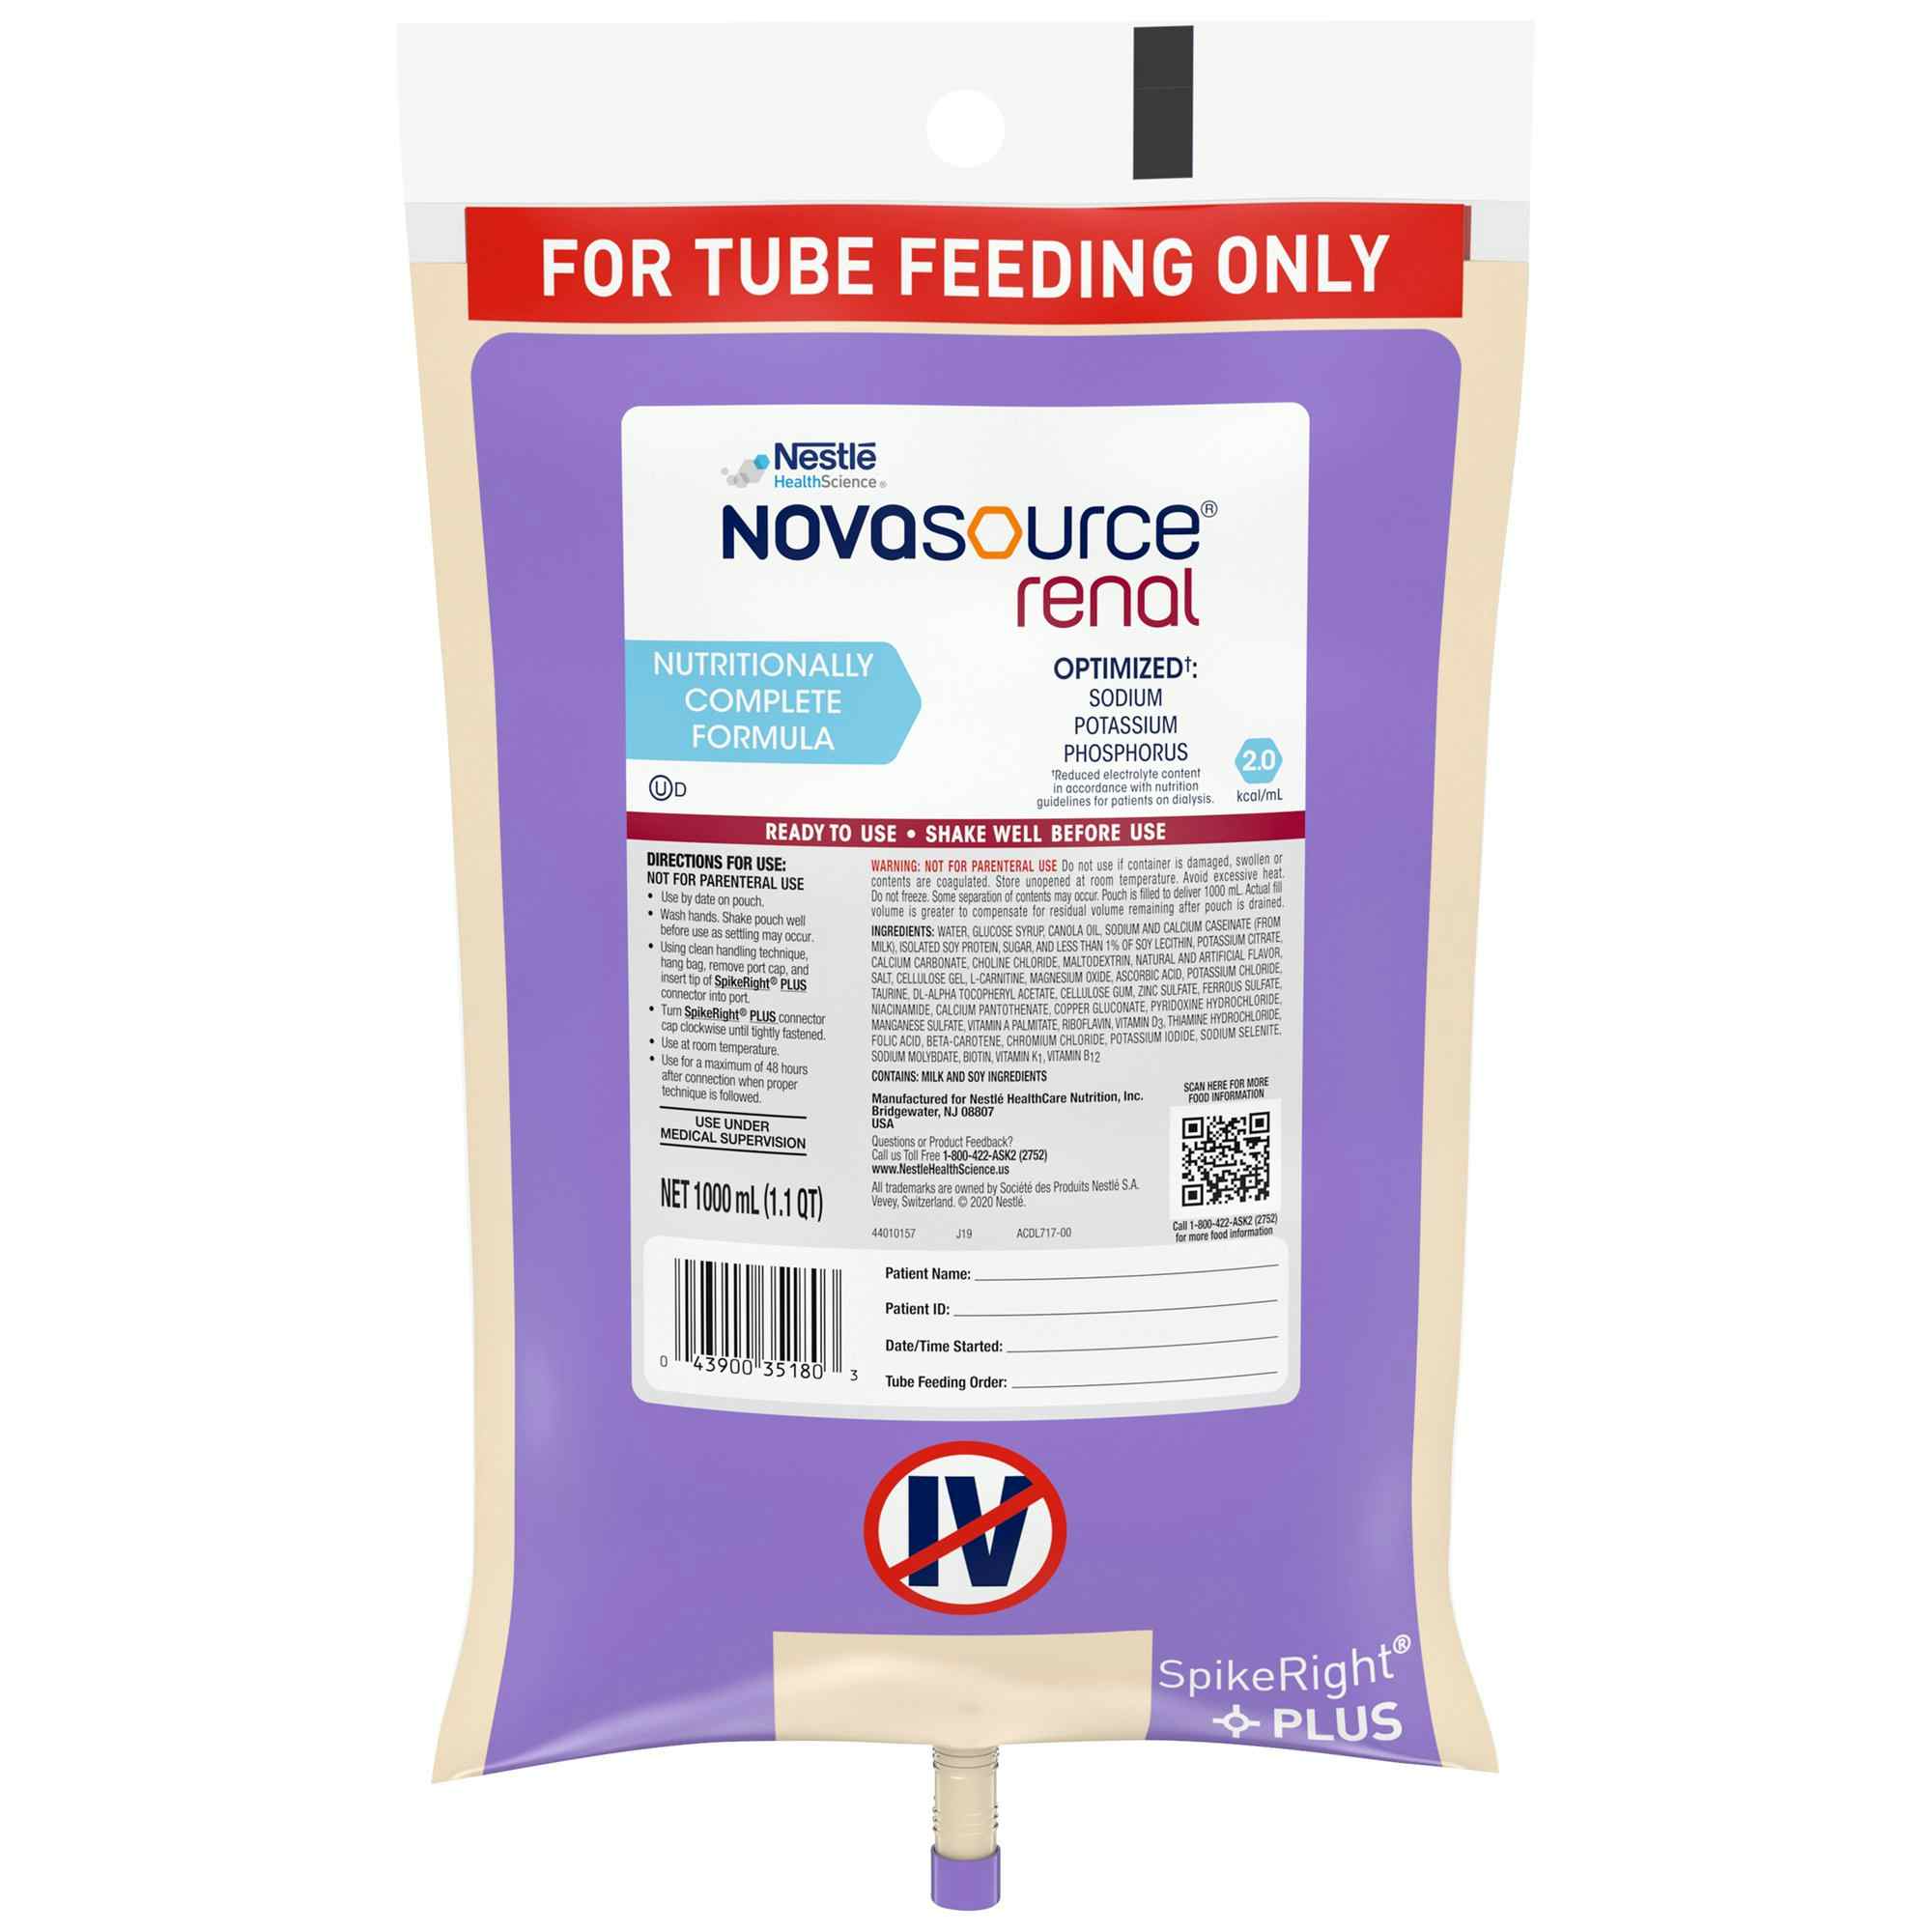 Nestle HealthScience Novasource Renal Optimized Tube Feeding Formula, 33.8 oz. , 10043900351800, Case of 6